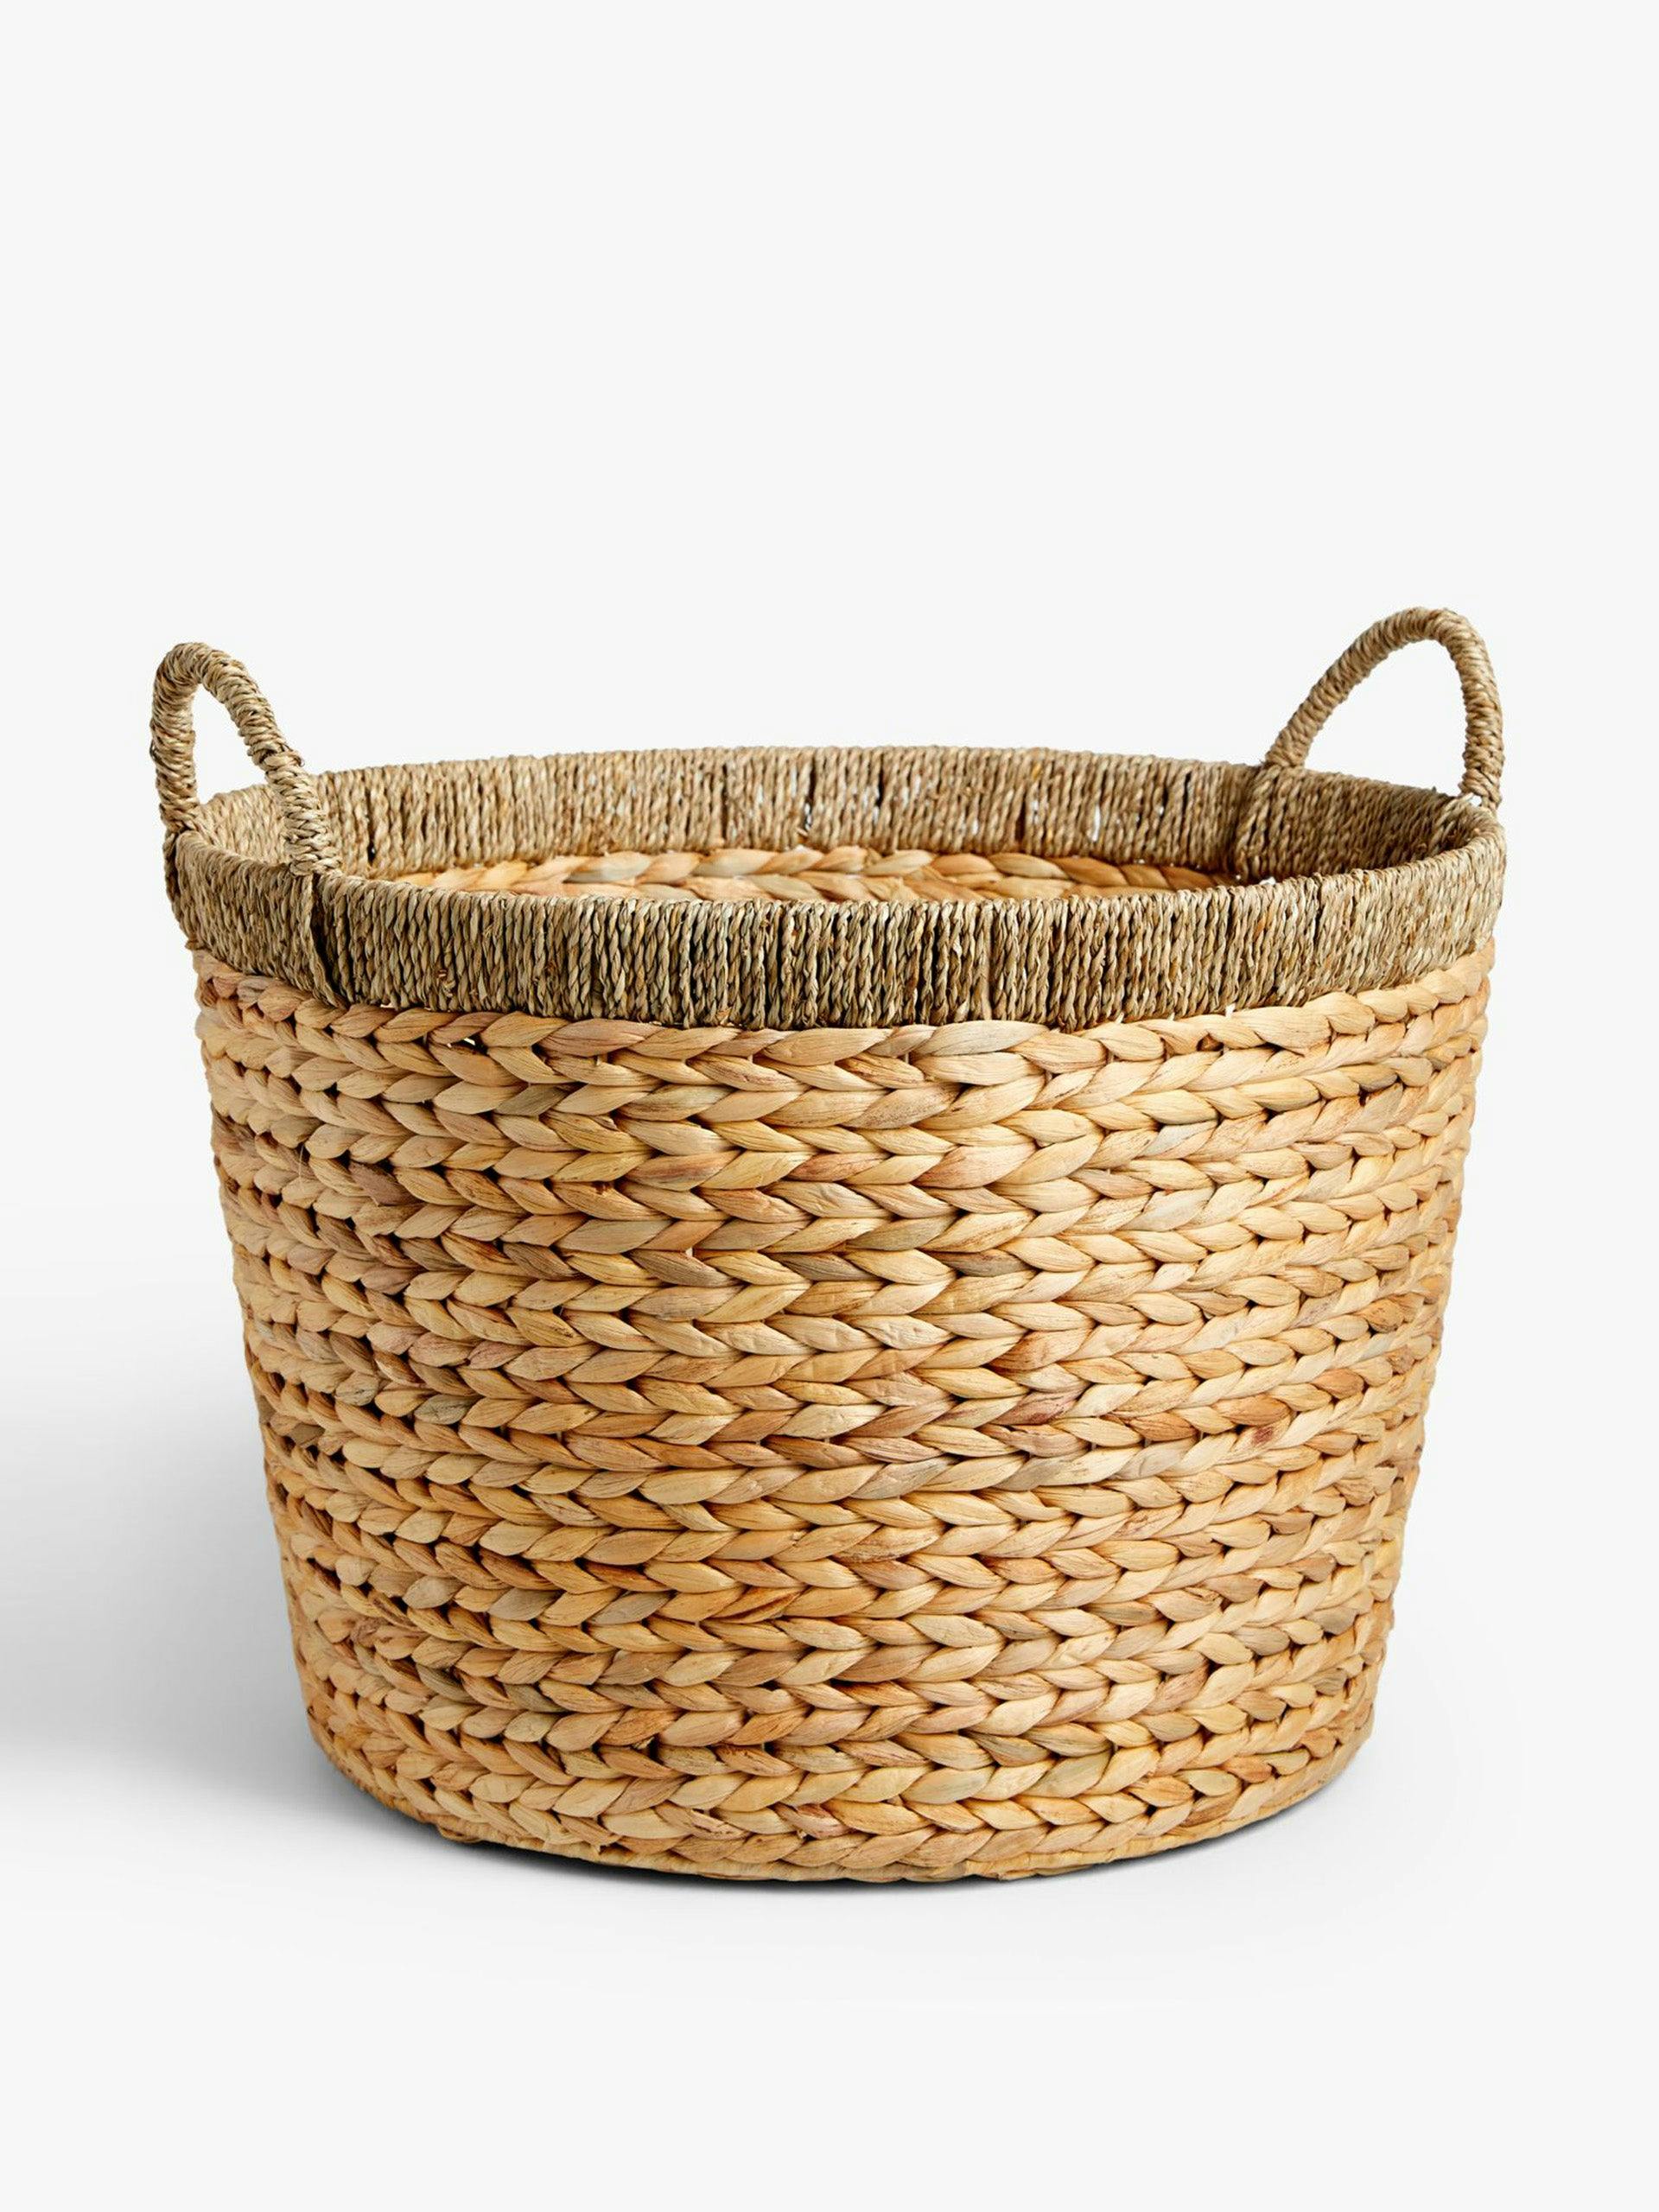 Water hyacinth log basket with contrast trim